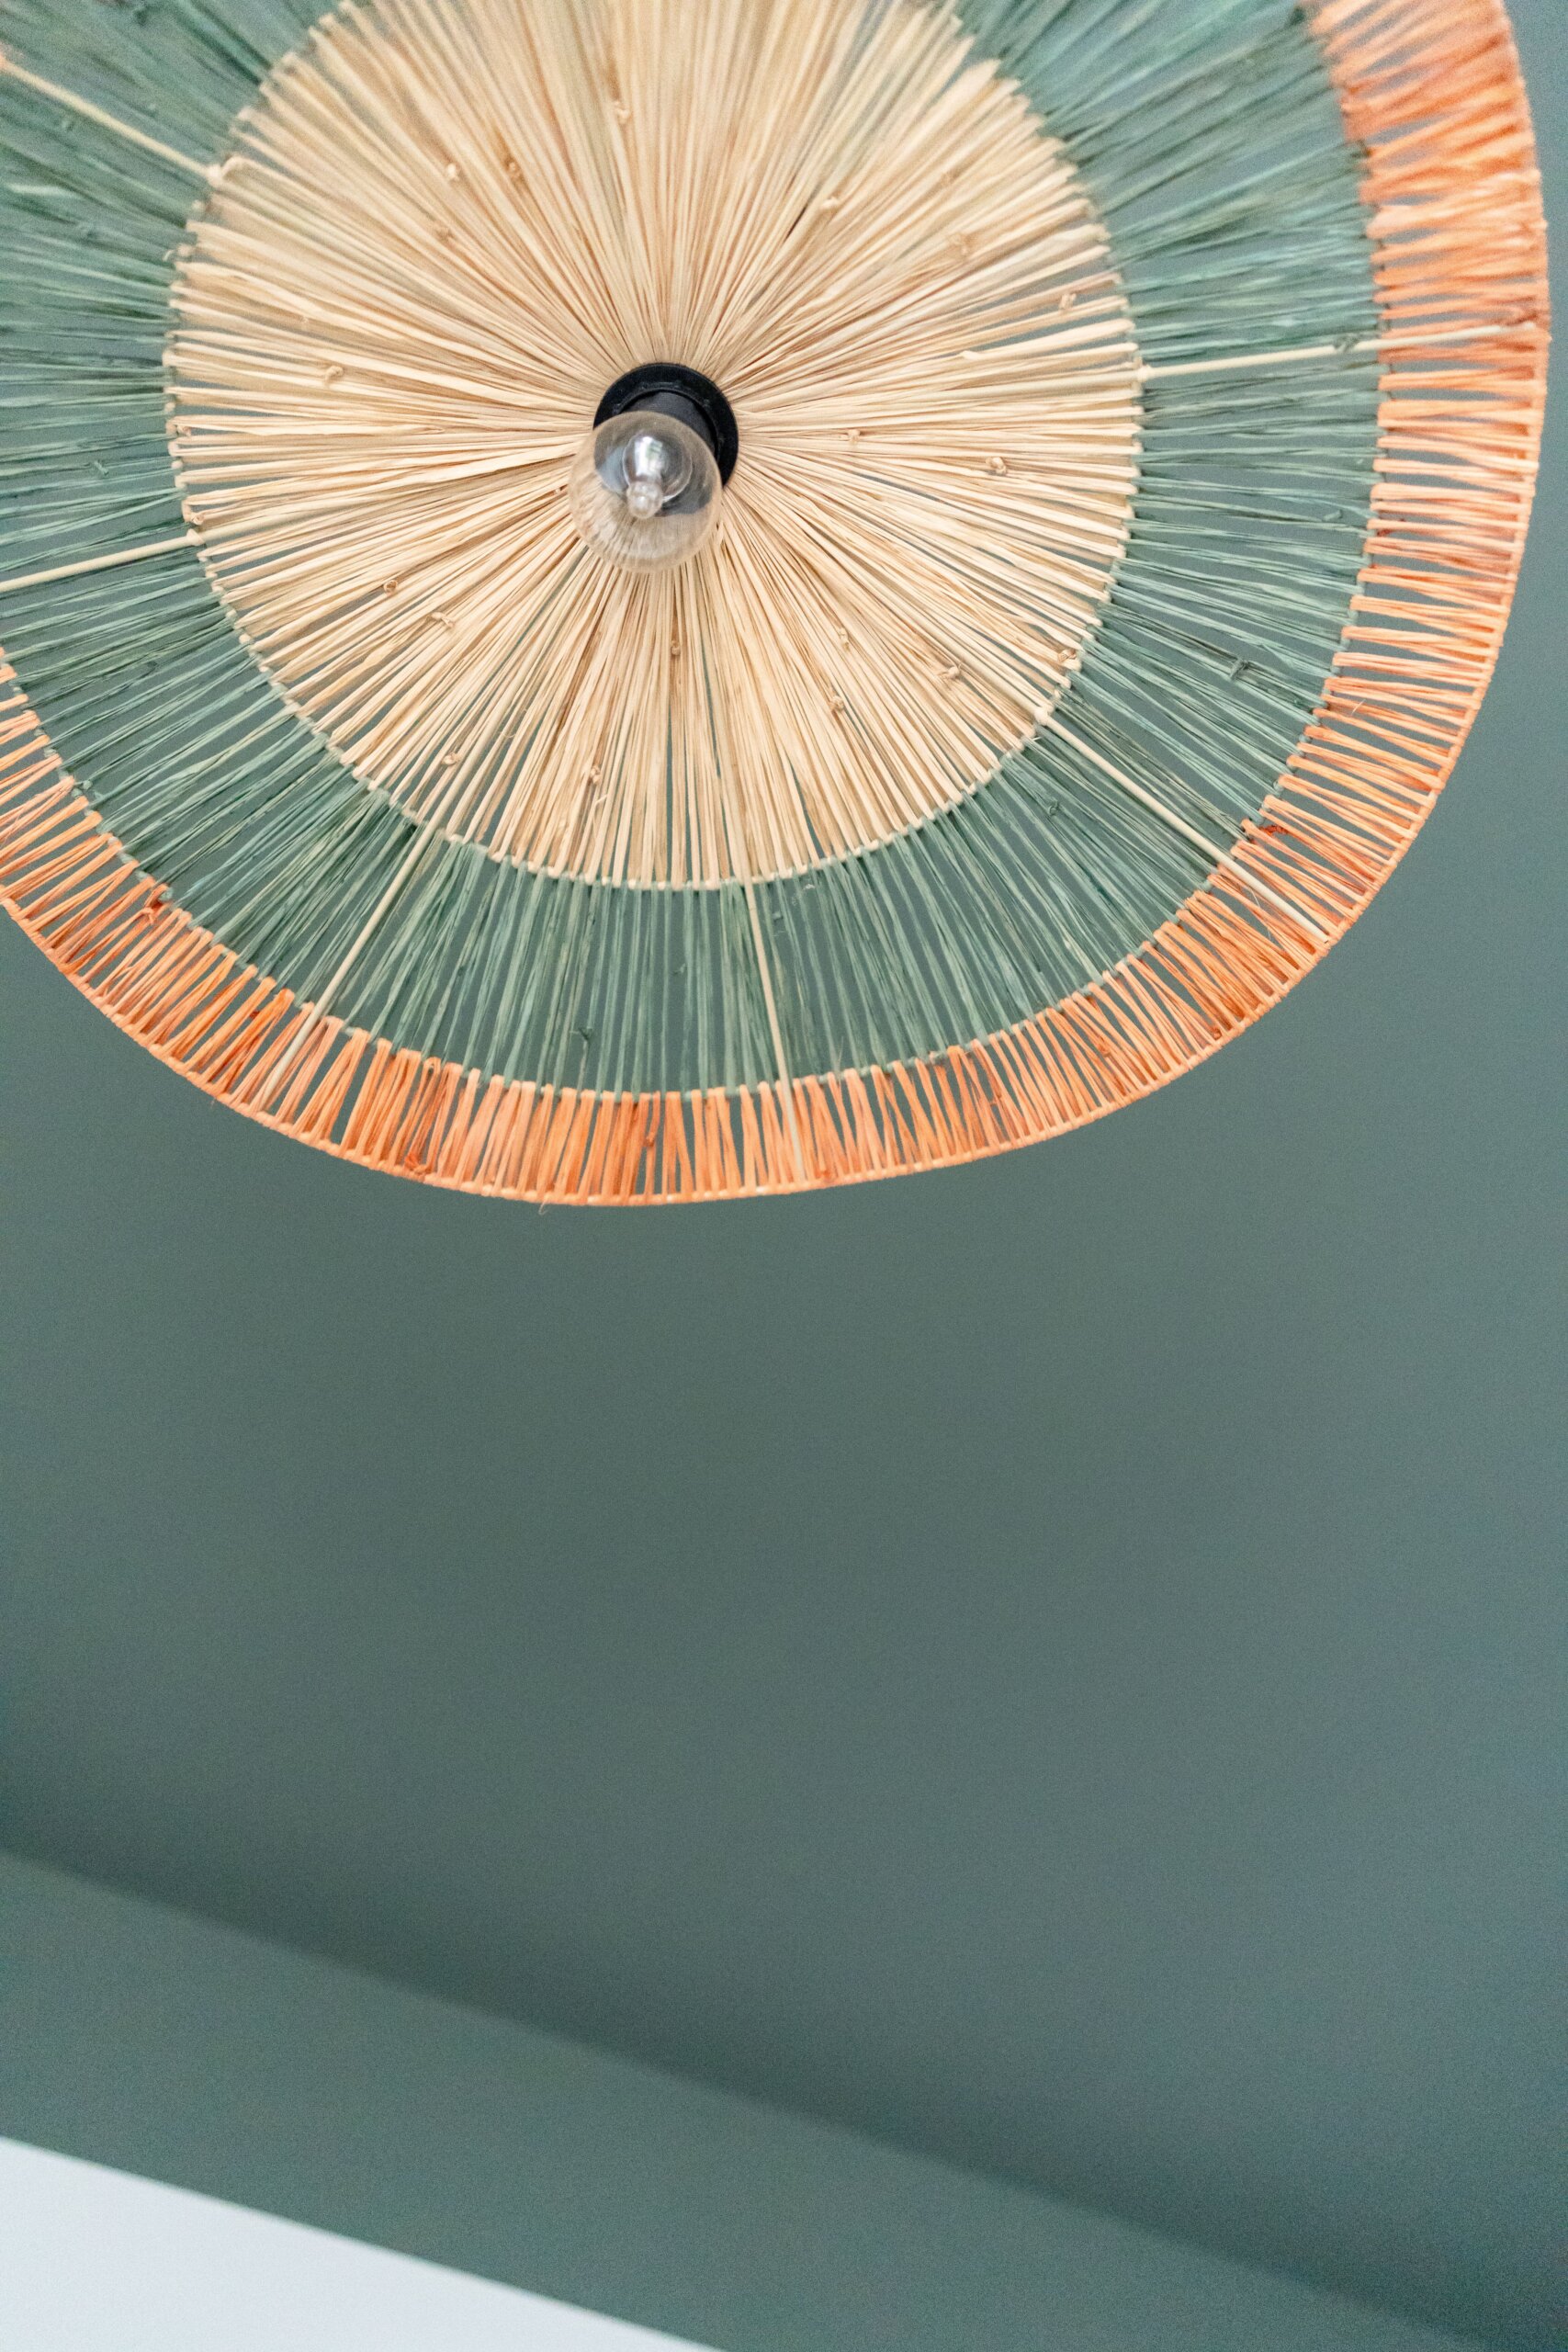 plafond vert et luminaire en raphia orange